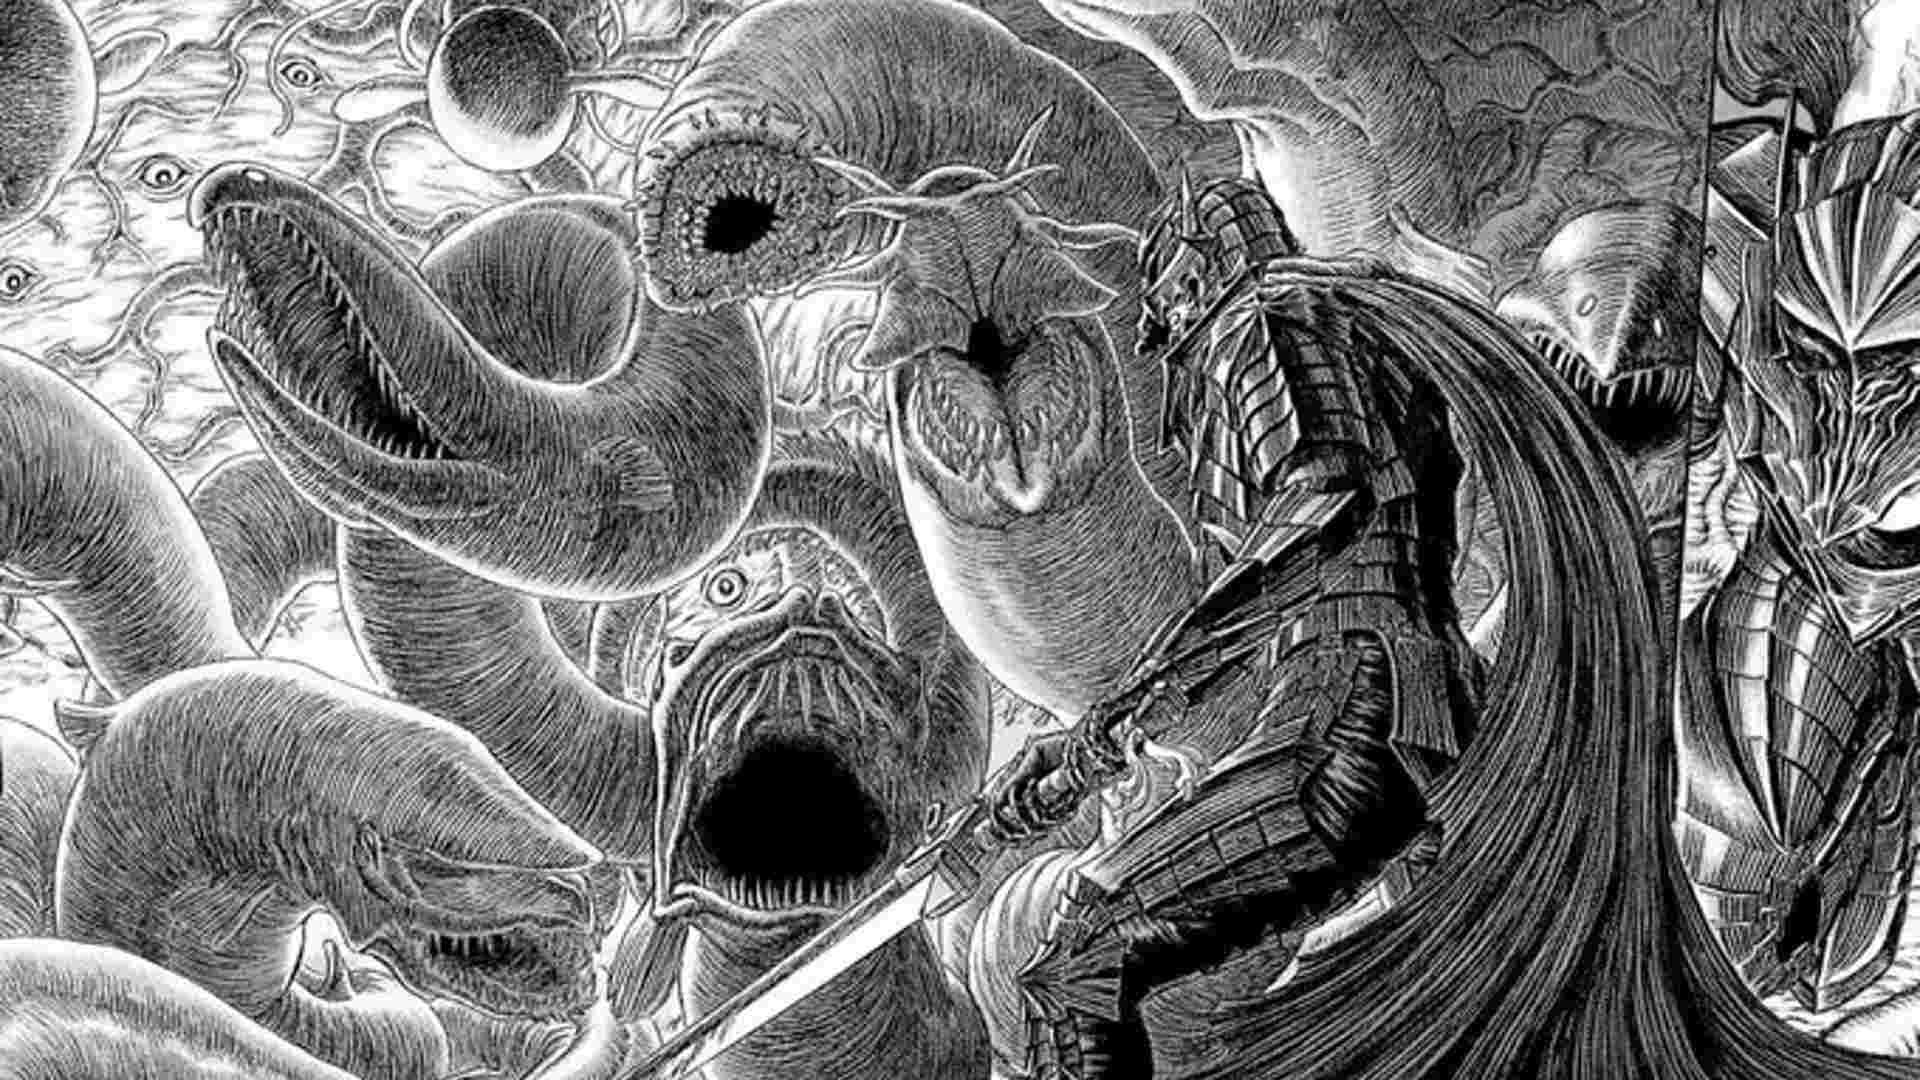 Berserk: Magnificent Dark Fantasy By Kentaro Miura - Sportslumo